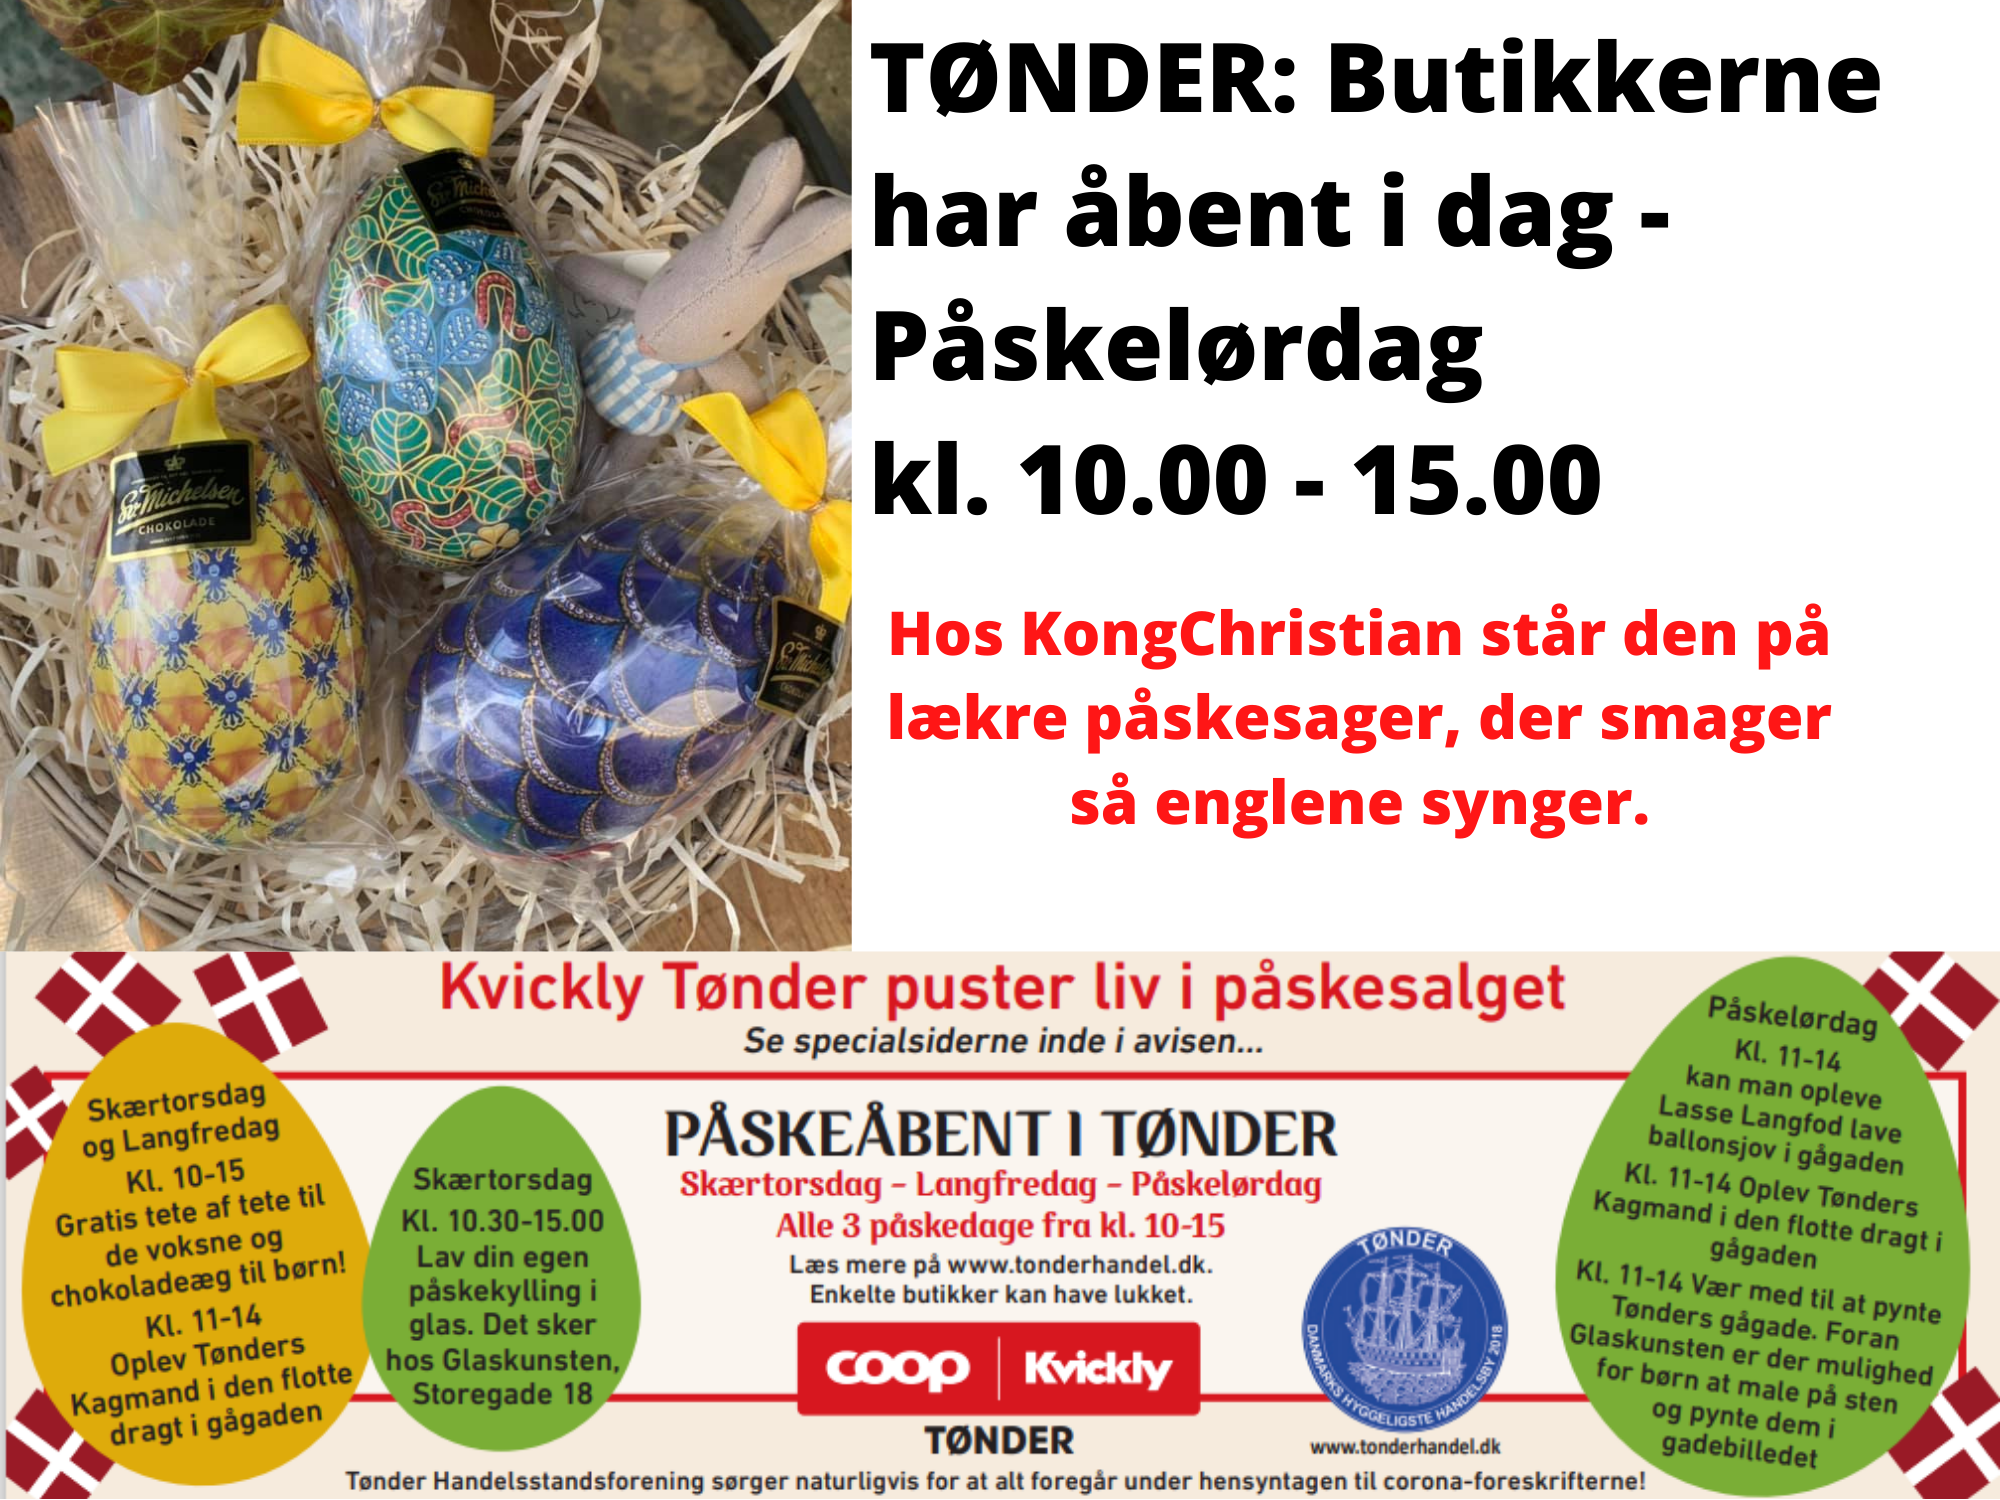 Påskelørdag er shoppingdag i Tønder